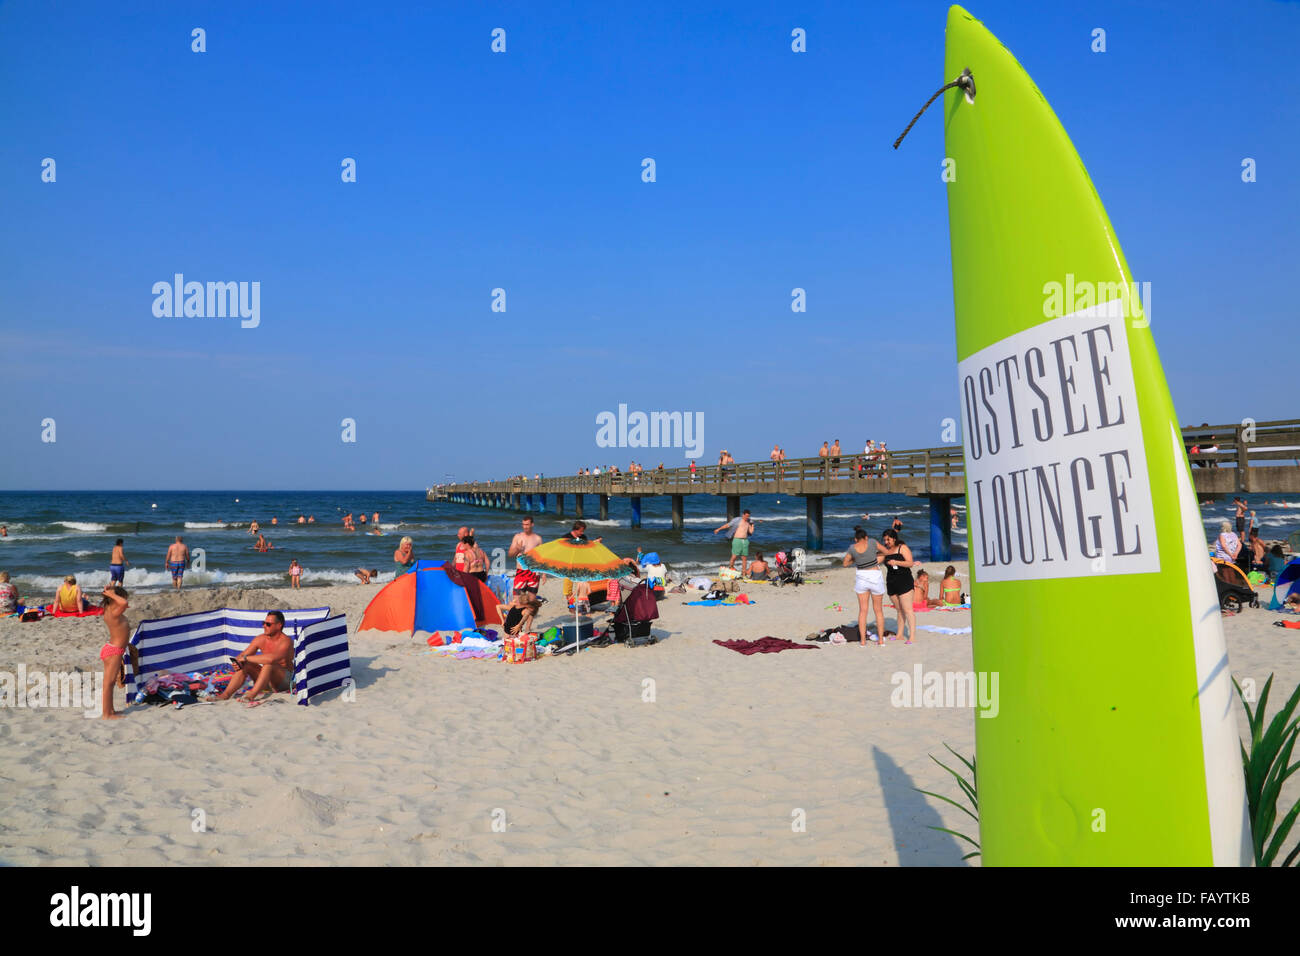 Boltenhagen, beach bar OSTSEE LOUNGE vicino a pier Seebruecke, Mar Baltico, Meclemburgo-Pomerania, Germania, Europa Foto Stock